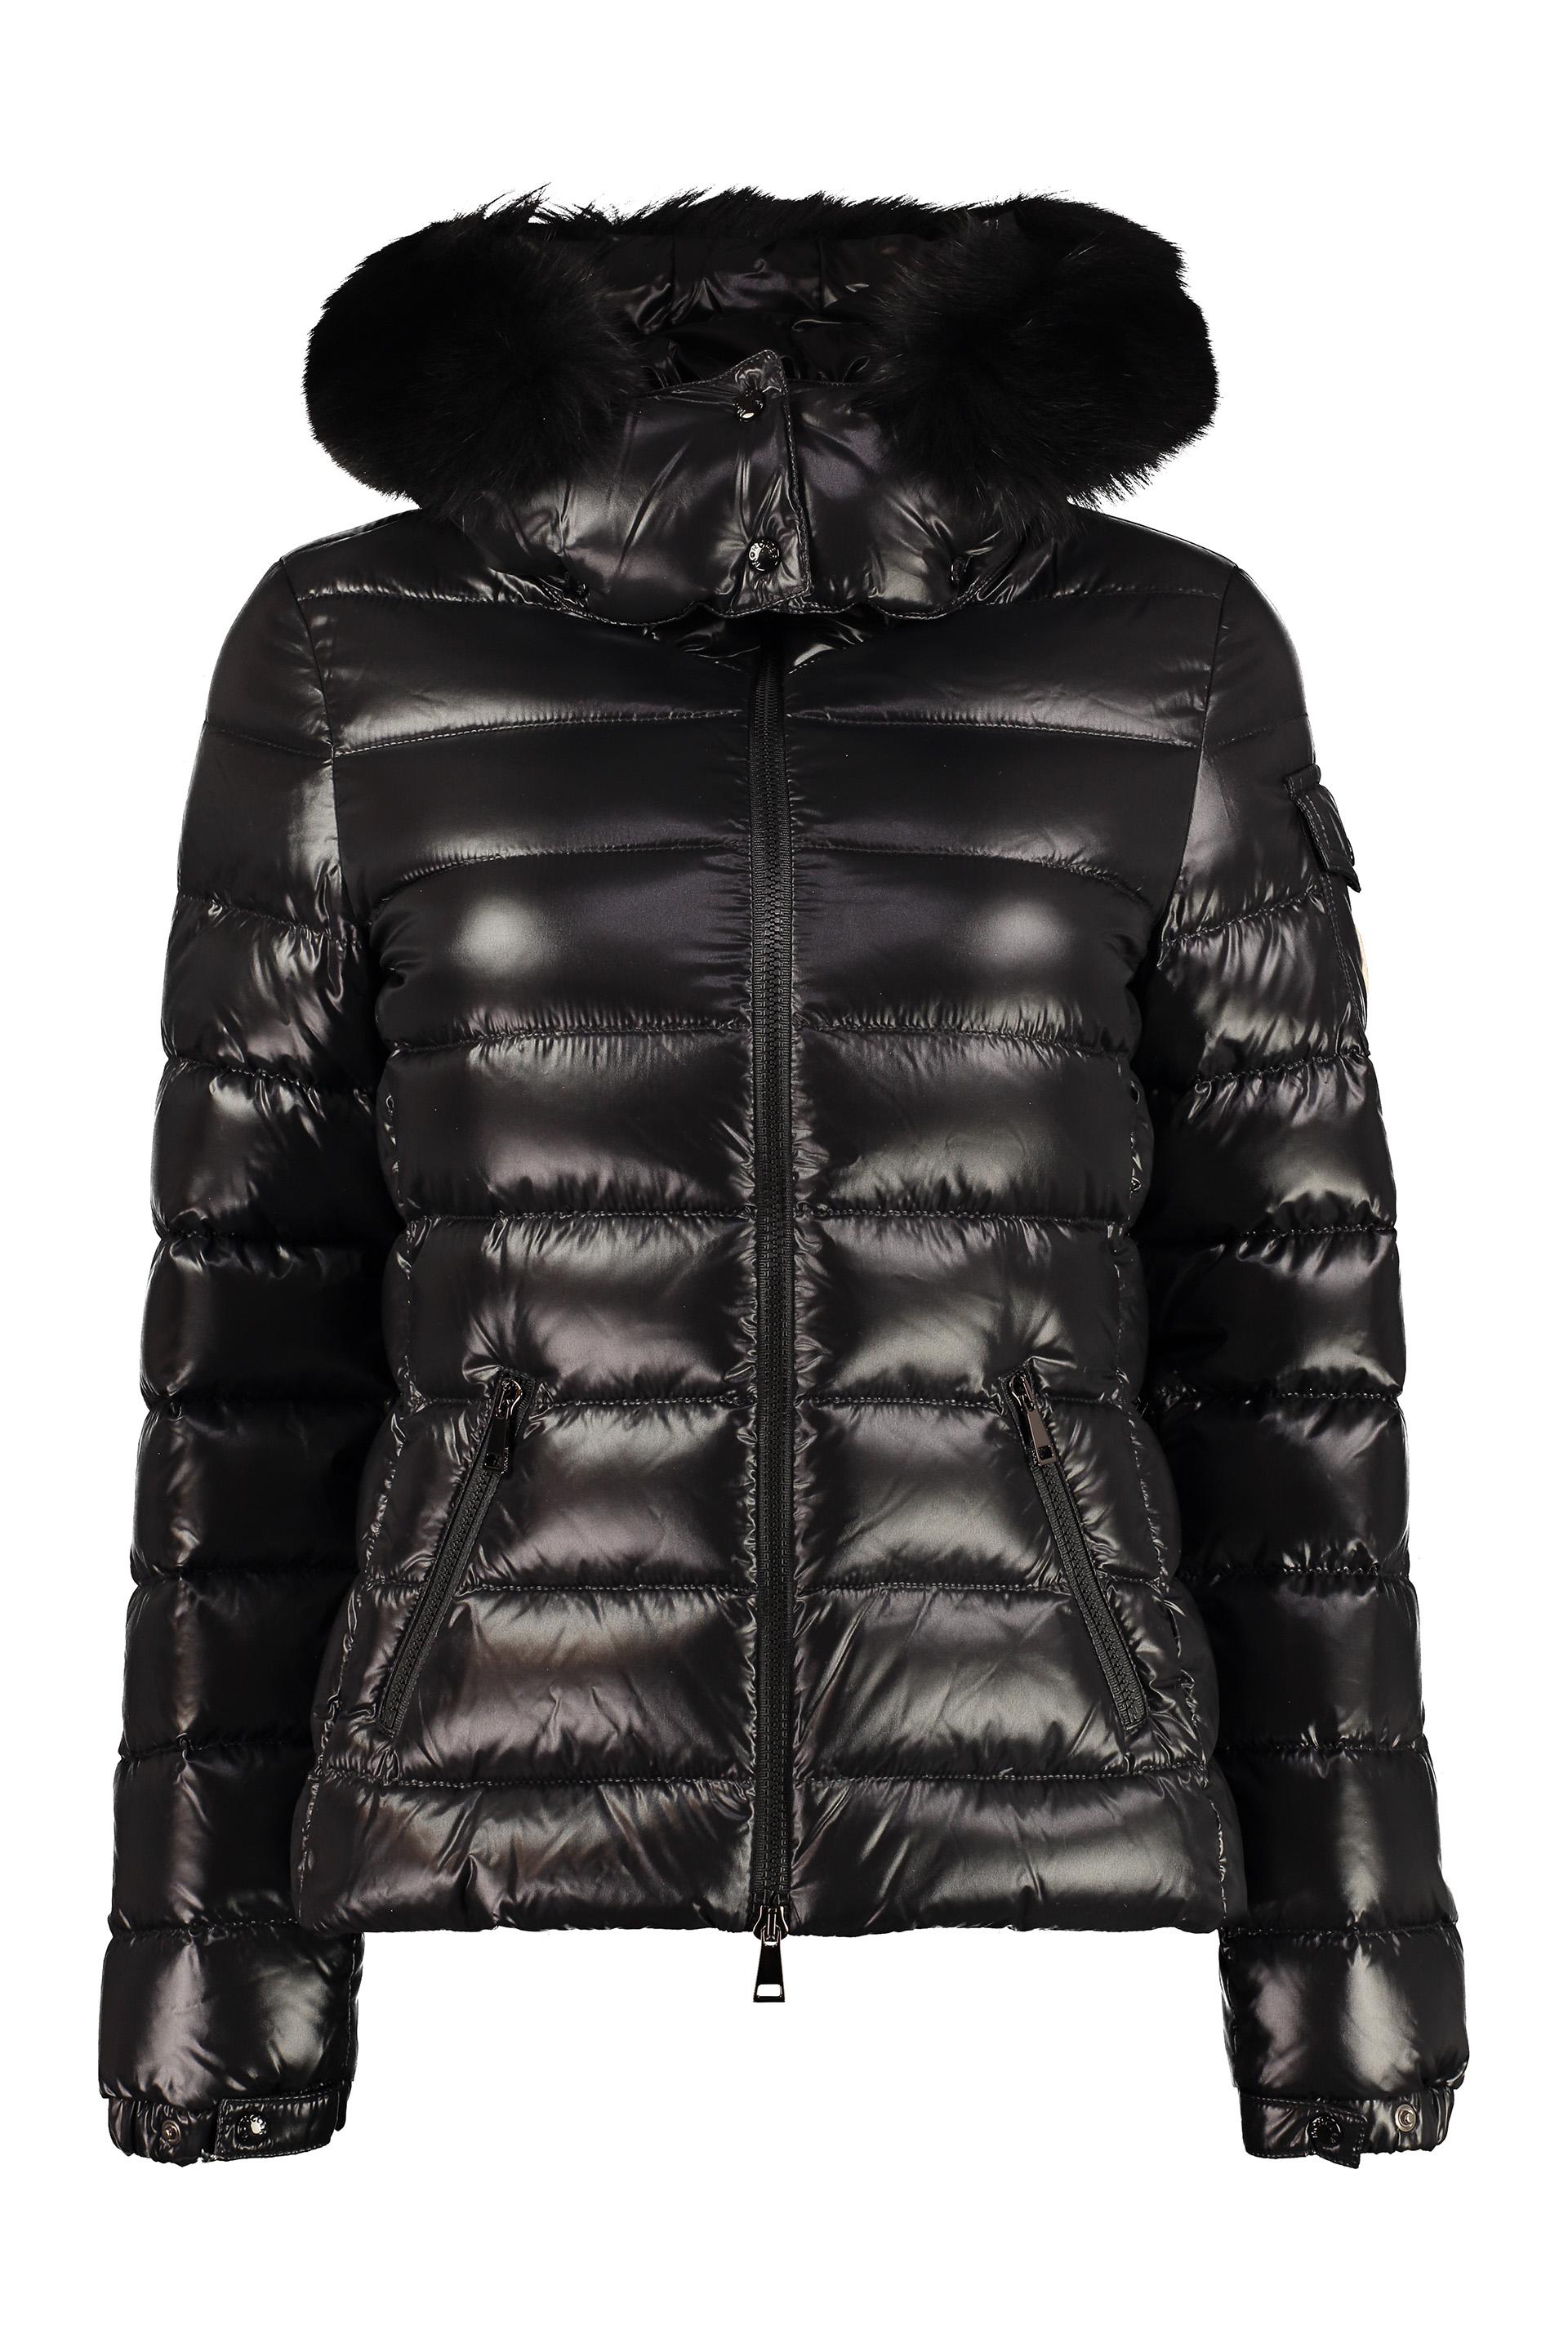 Black Moncler Coat With Fur Hood | art-kk.com